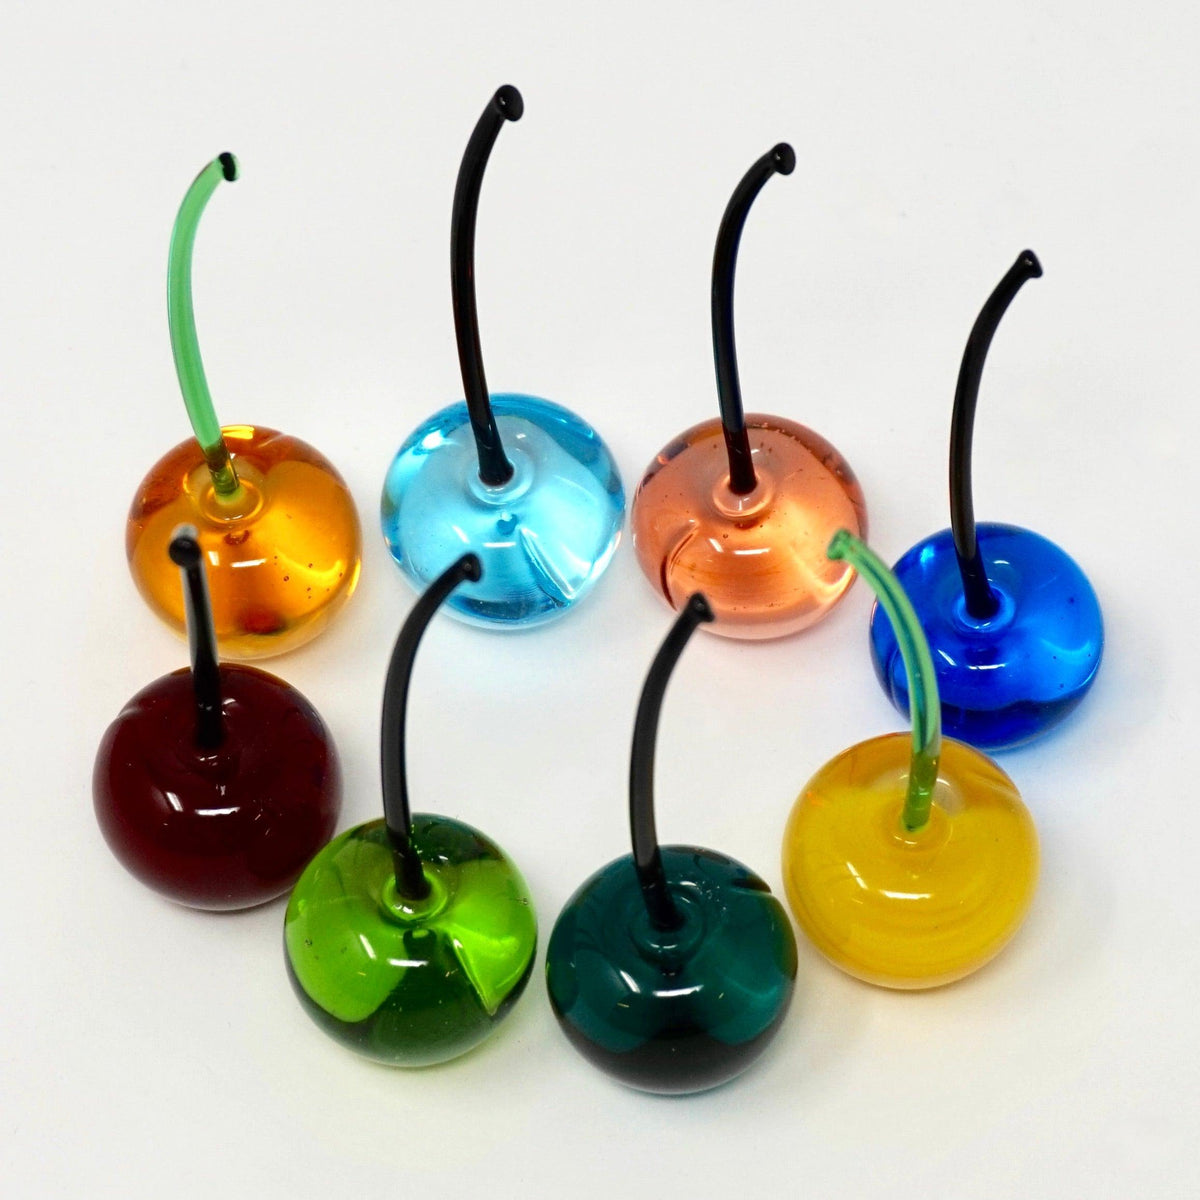 Murano Glass Cherries, Lifelike, Multi-Color, Set of 3, Handmade in Italy at MyItalianDecor